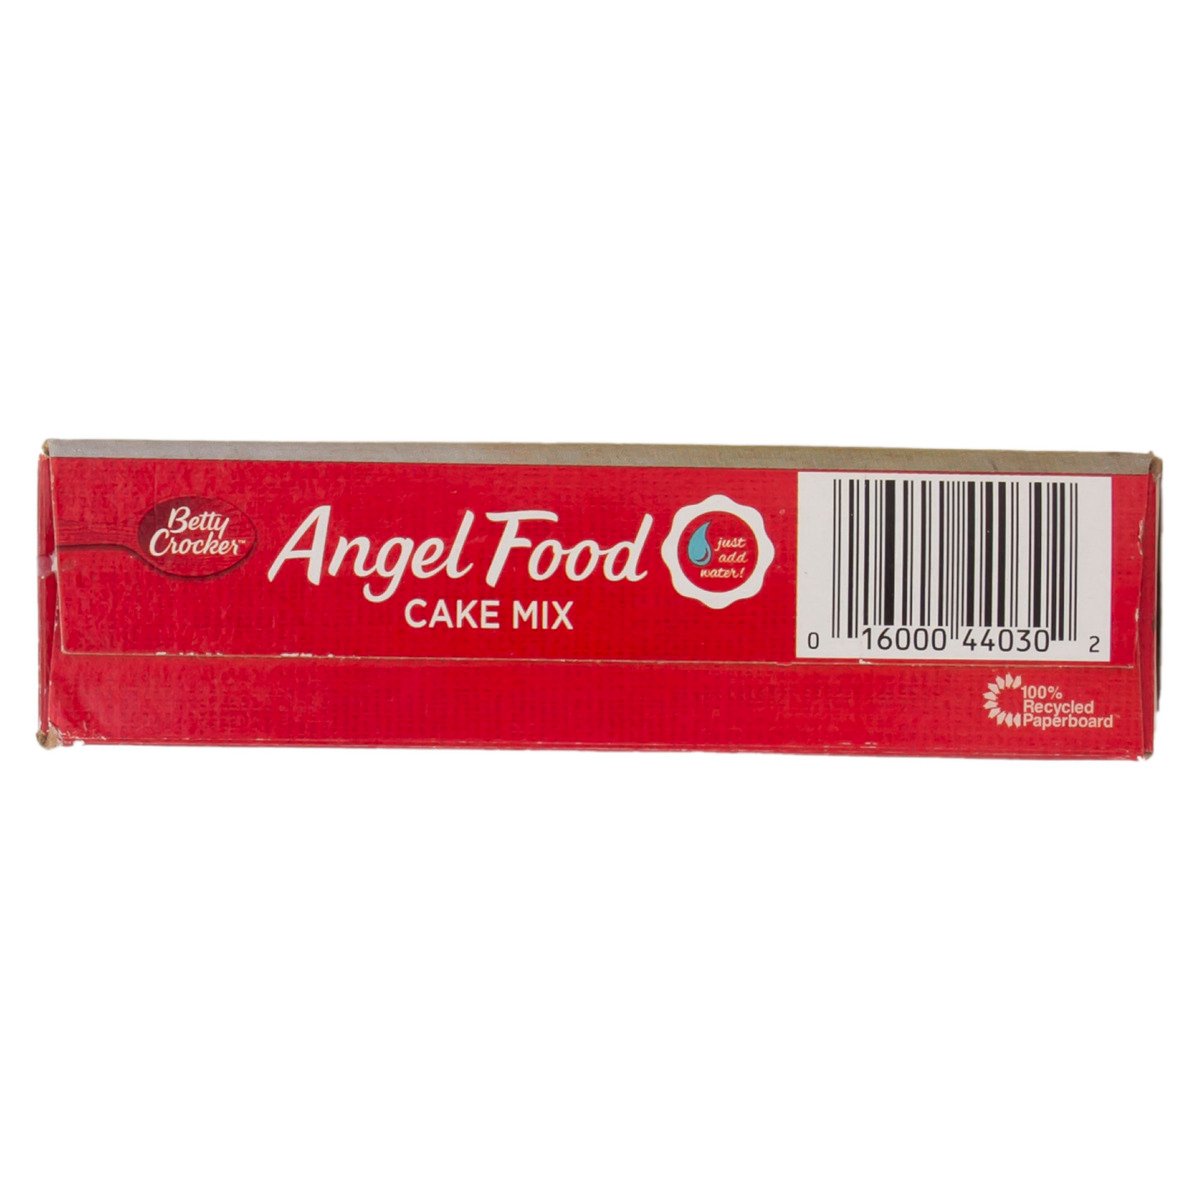 Betty Crocker Angel Food Cake Mix 453 g